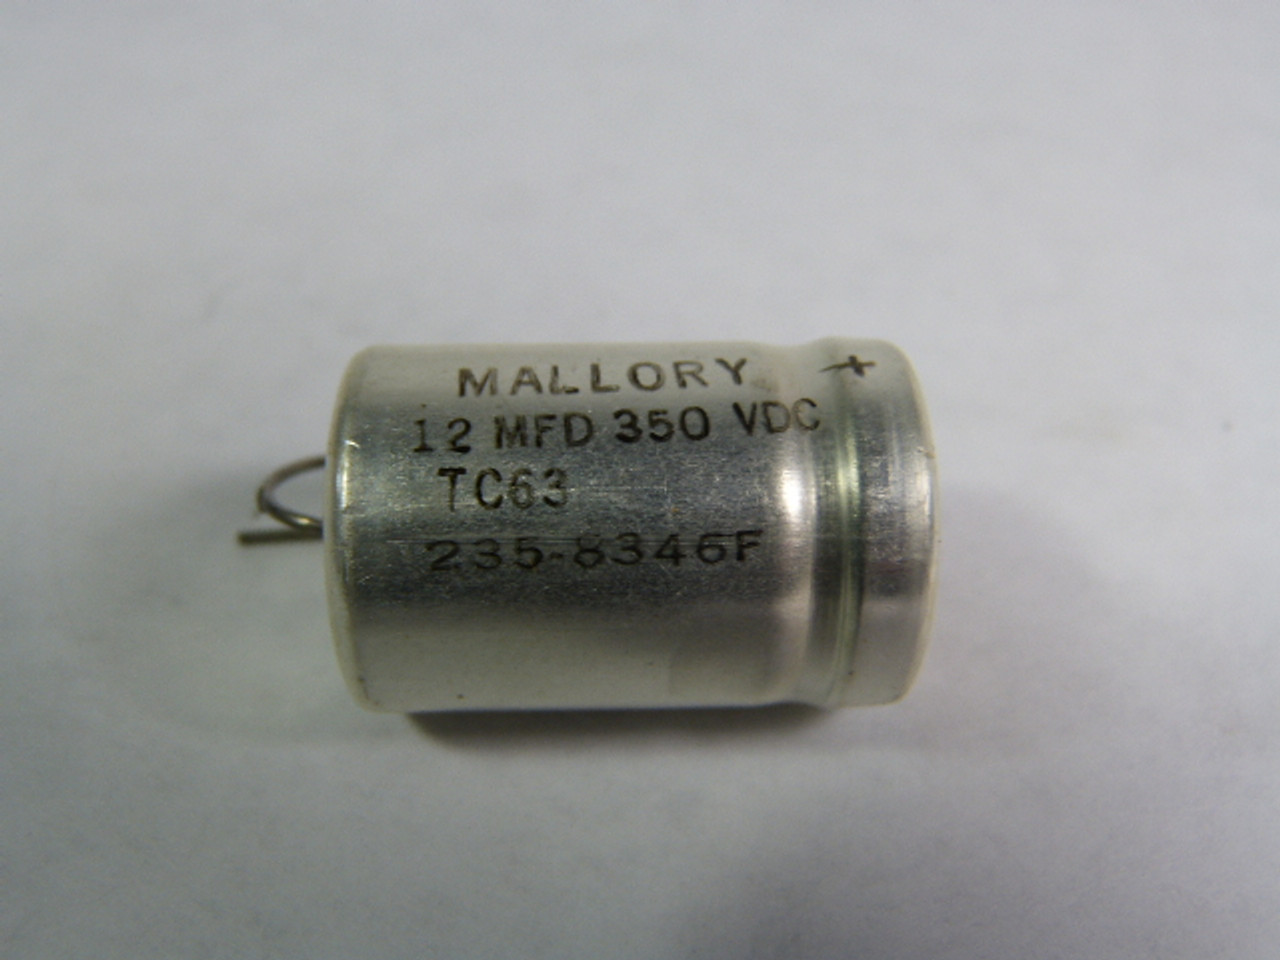 Mallory TC63/235-8346F Capacitor 12mfd 350VDC USED